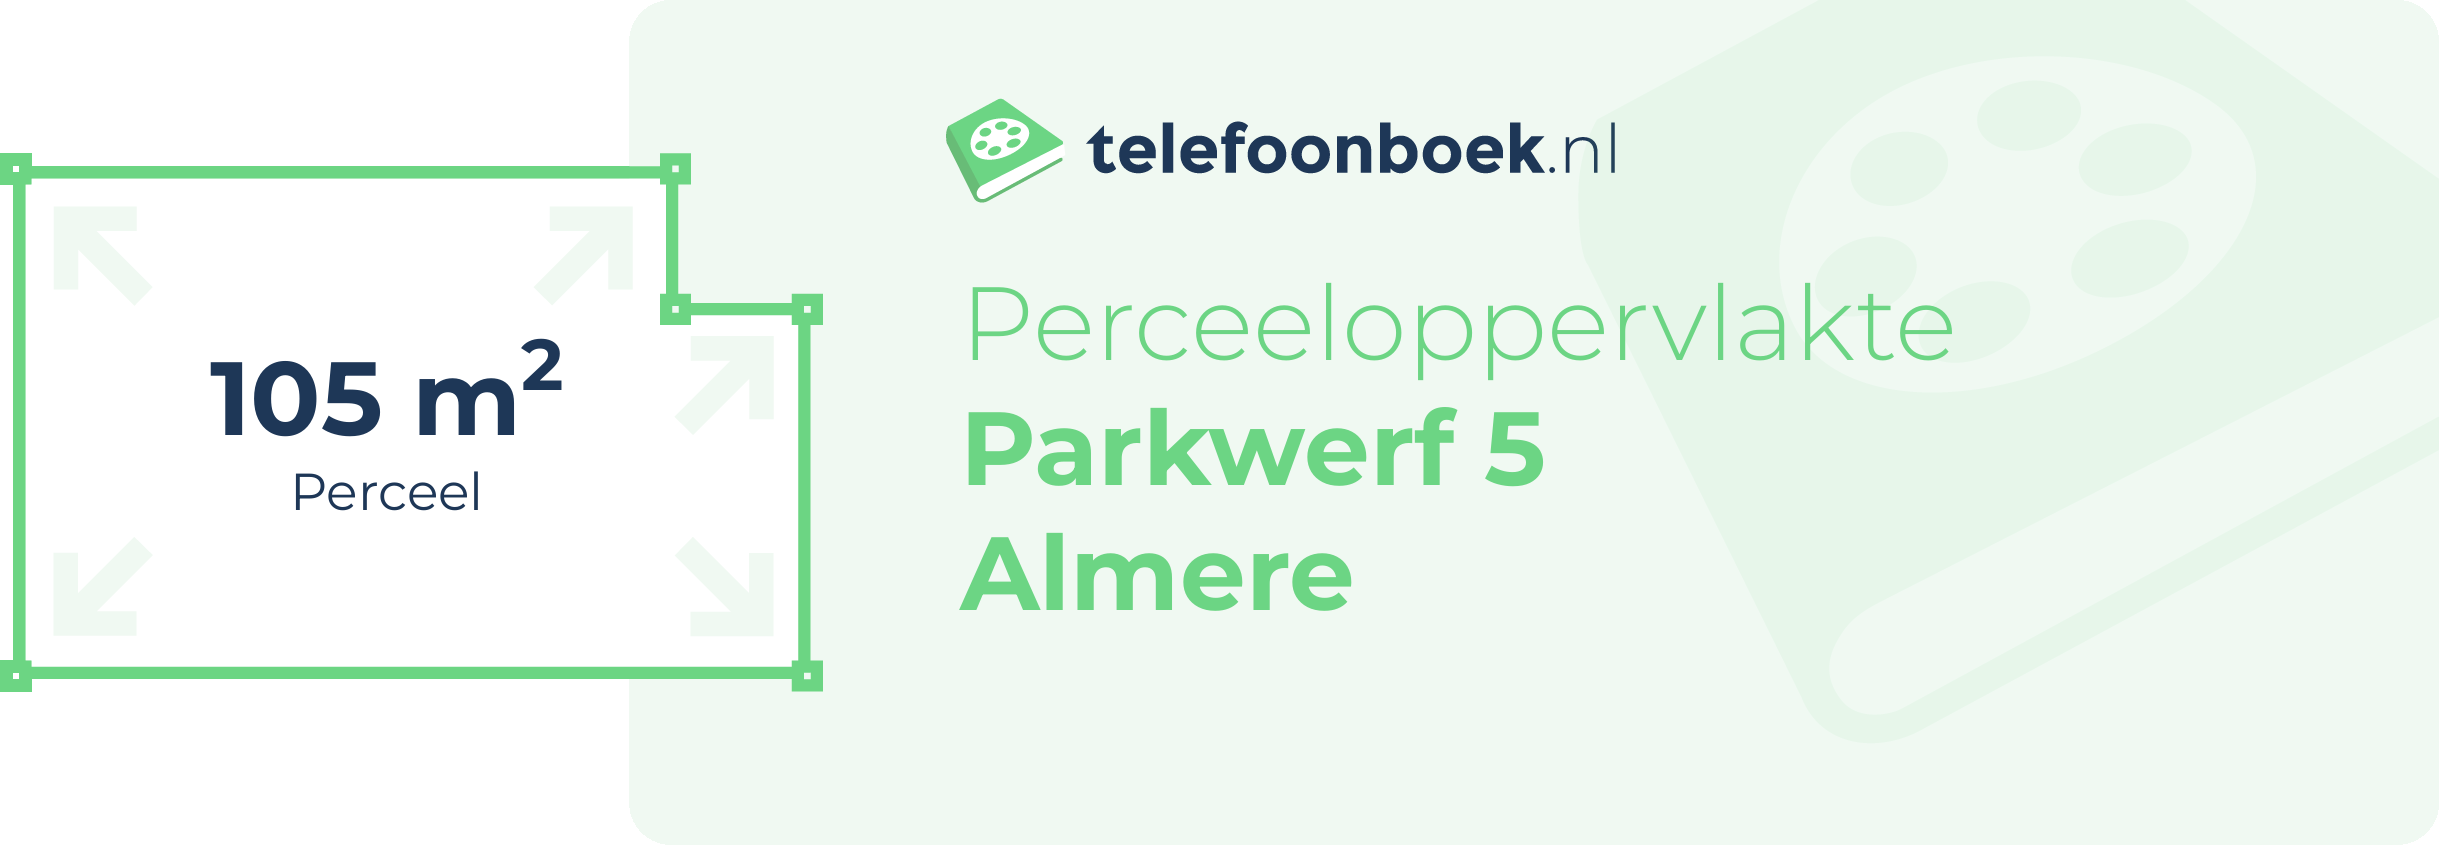 Perceeloppervlakte Parkwerf 5 Almere